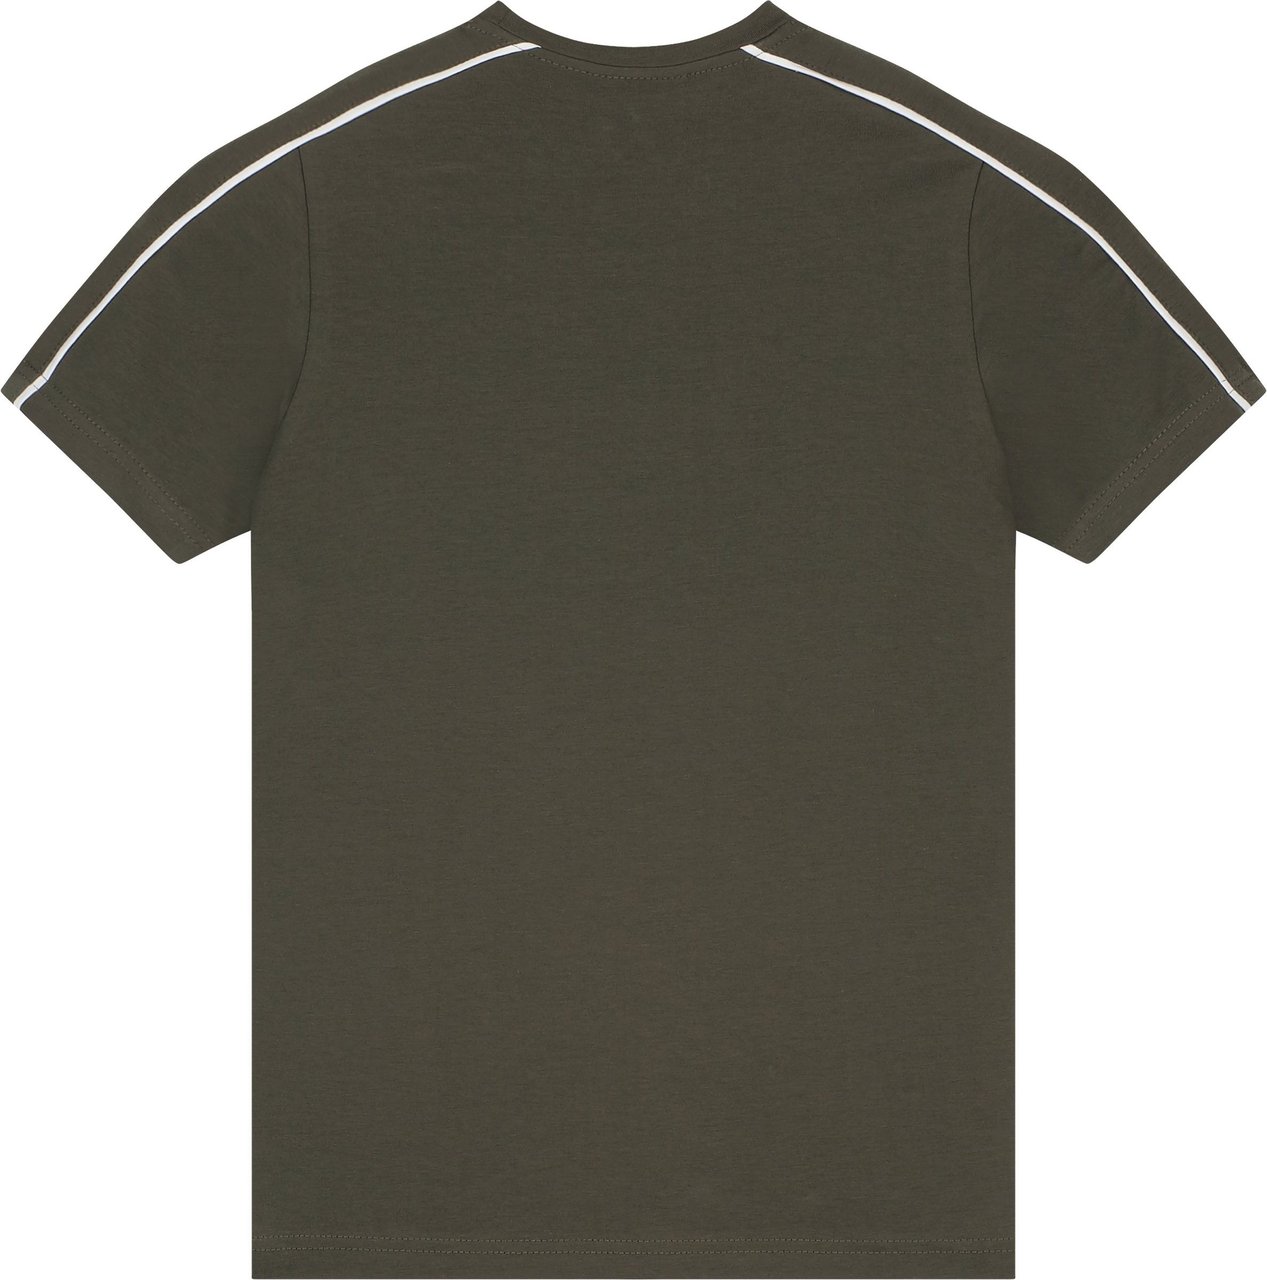 Malelions Coach T-Shirt- Army/White Groen